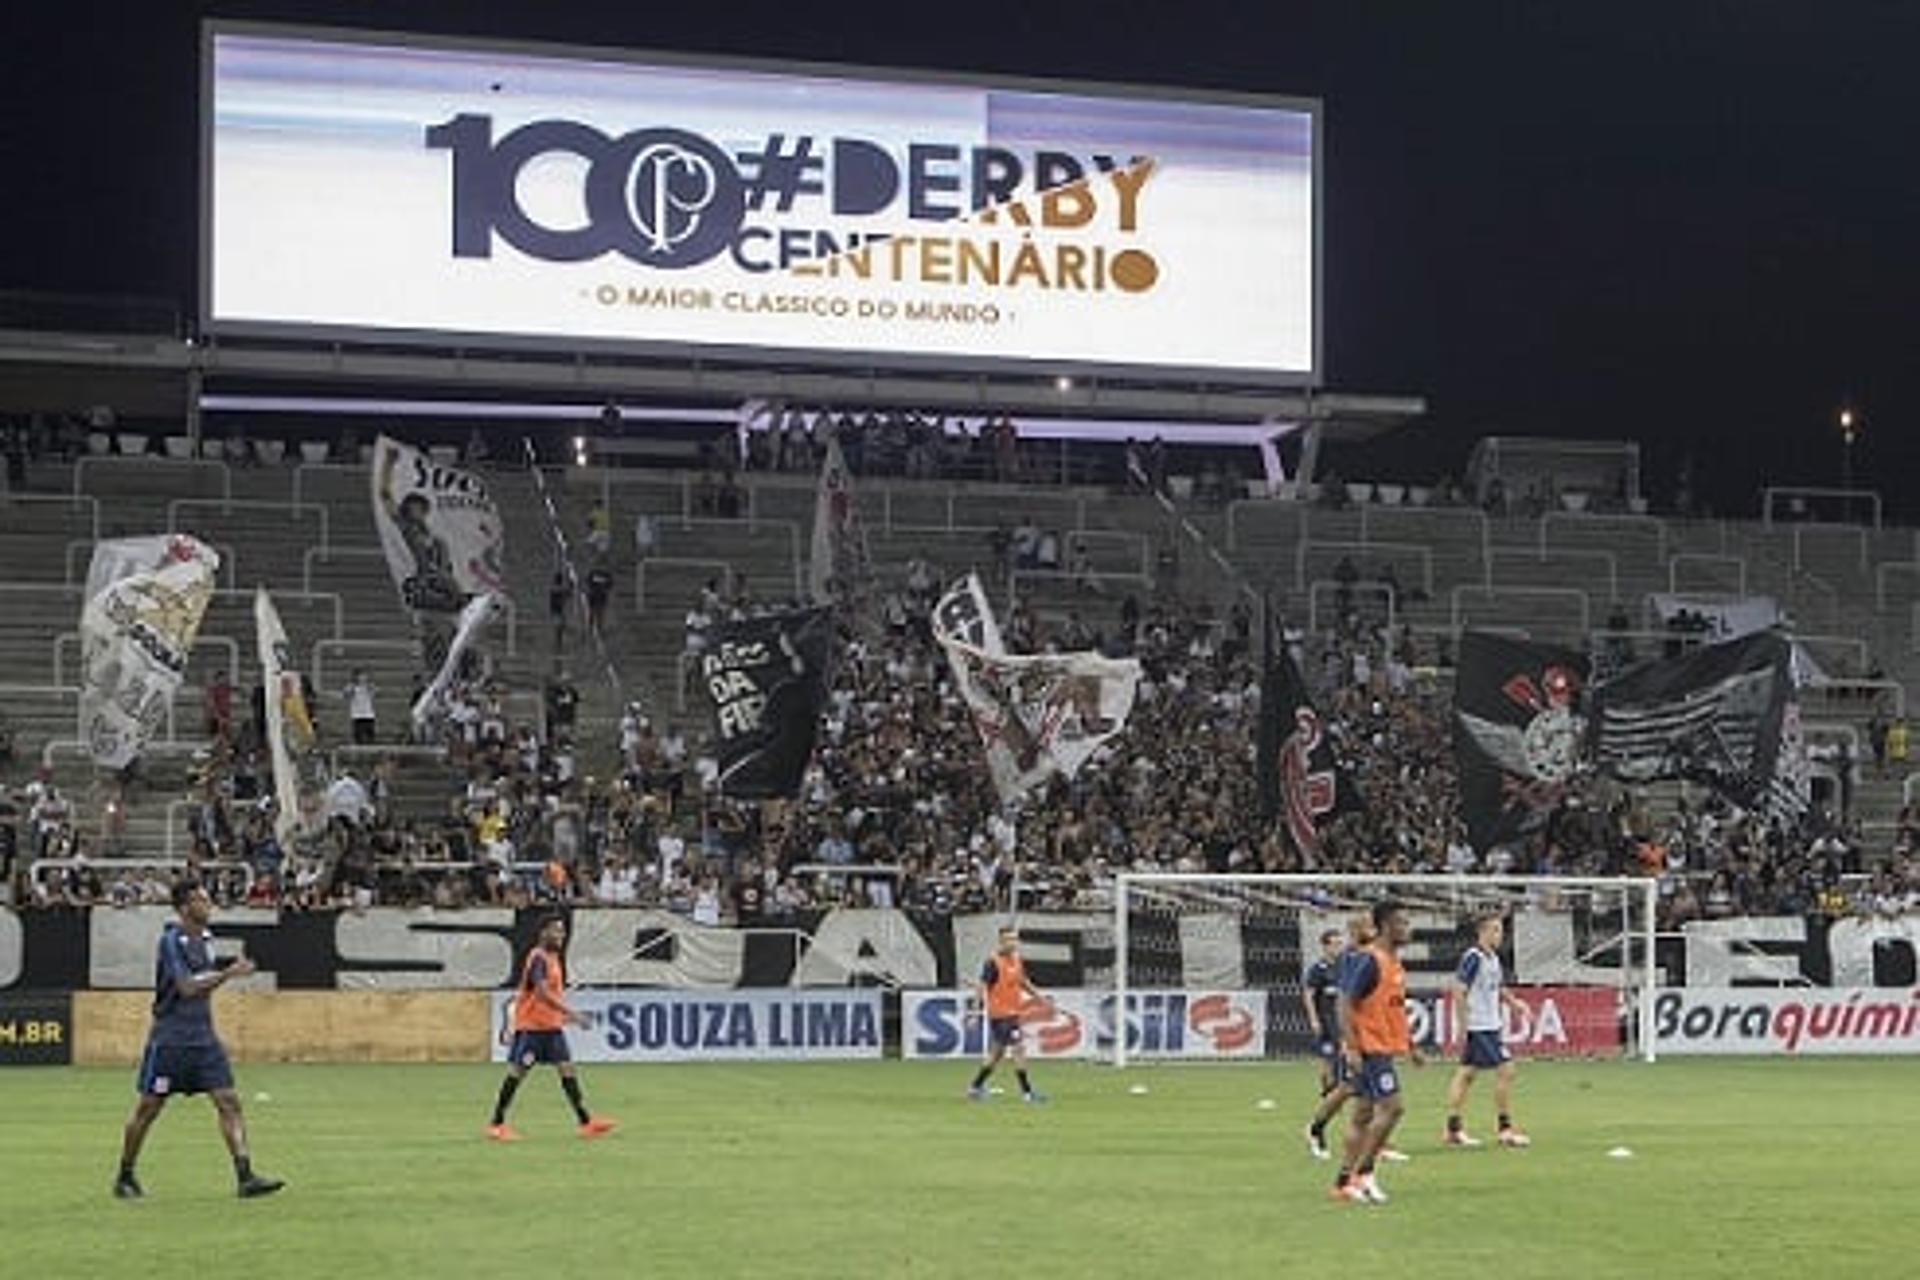 Treino do Corinthians na Arena antes de Corinthians x Palmeiras